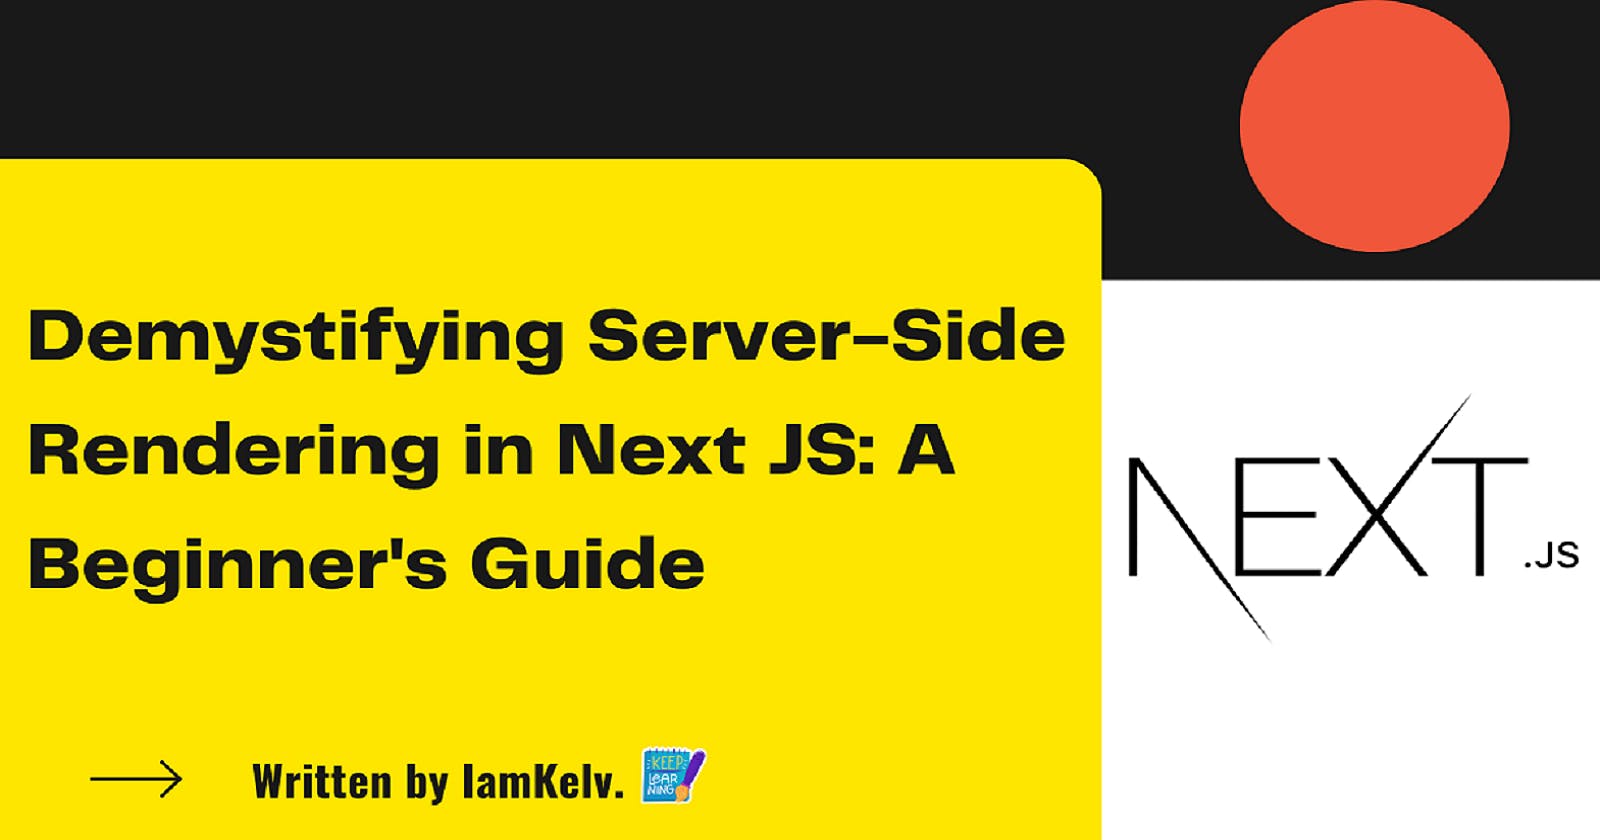 Demystifying Server-Side Rendering in Next JS: A Beginner's Guide